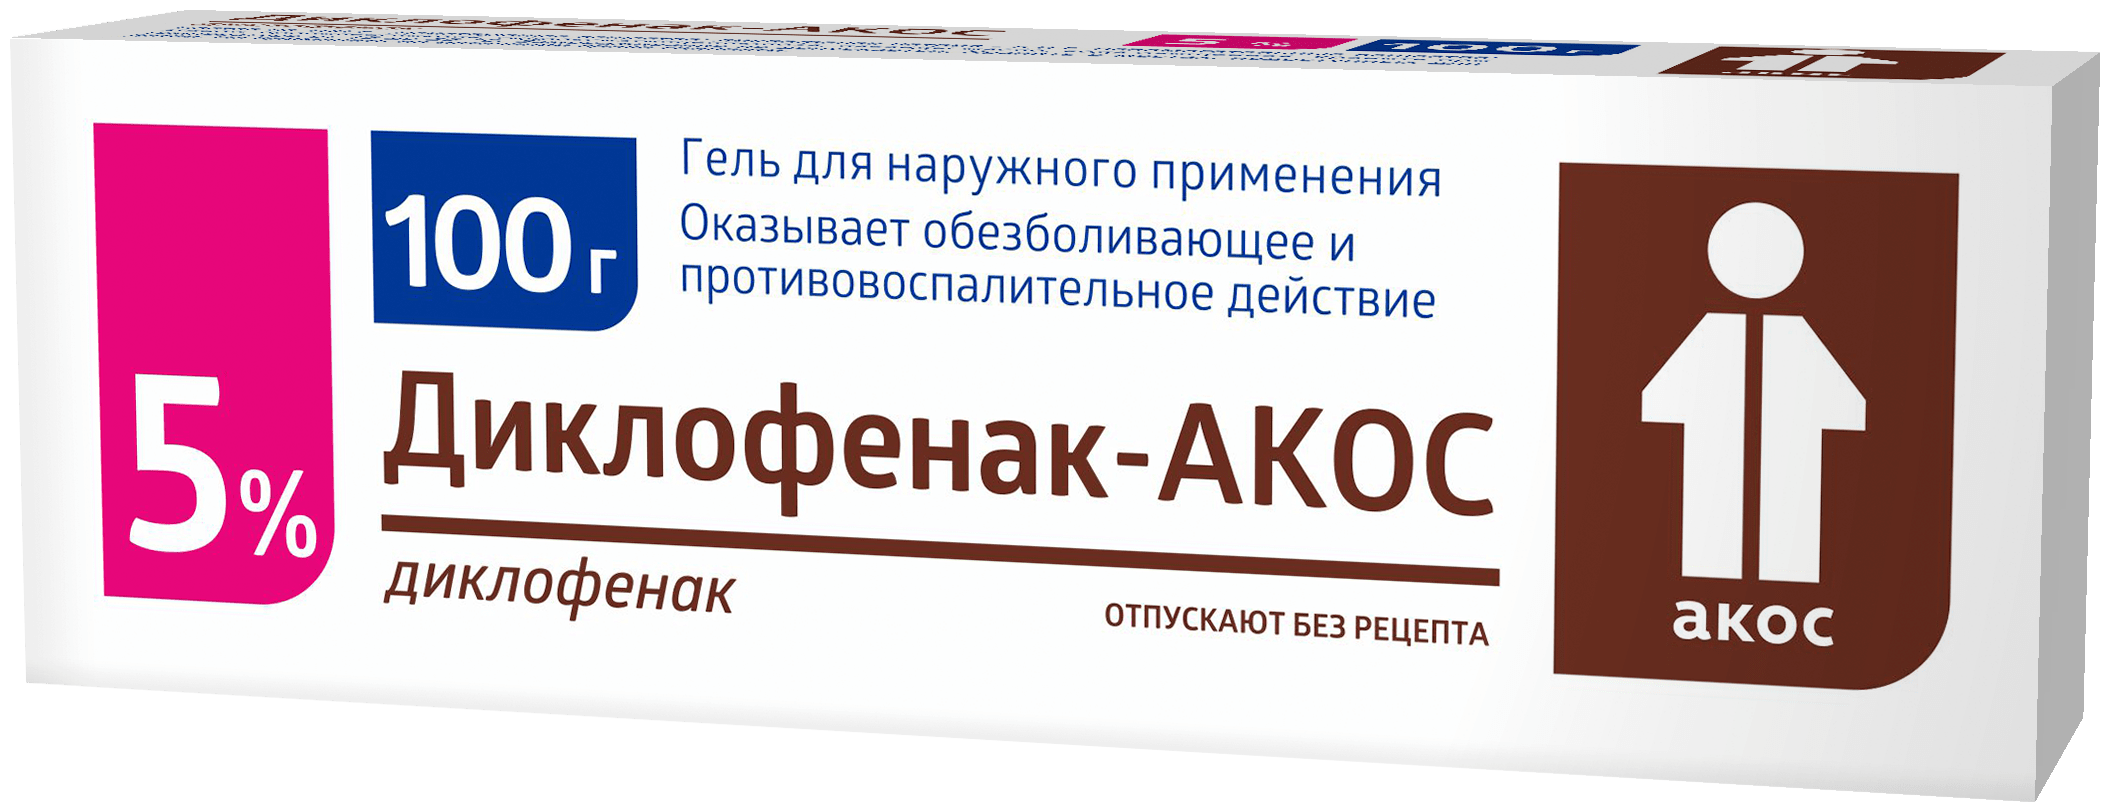 Диклофенак-акос гель д/нар. прим., 5%, 100 г